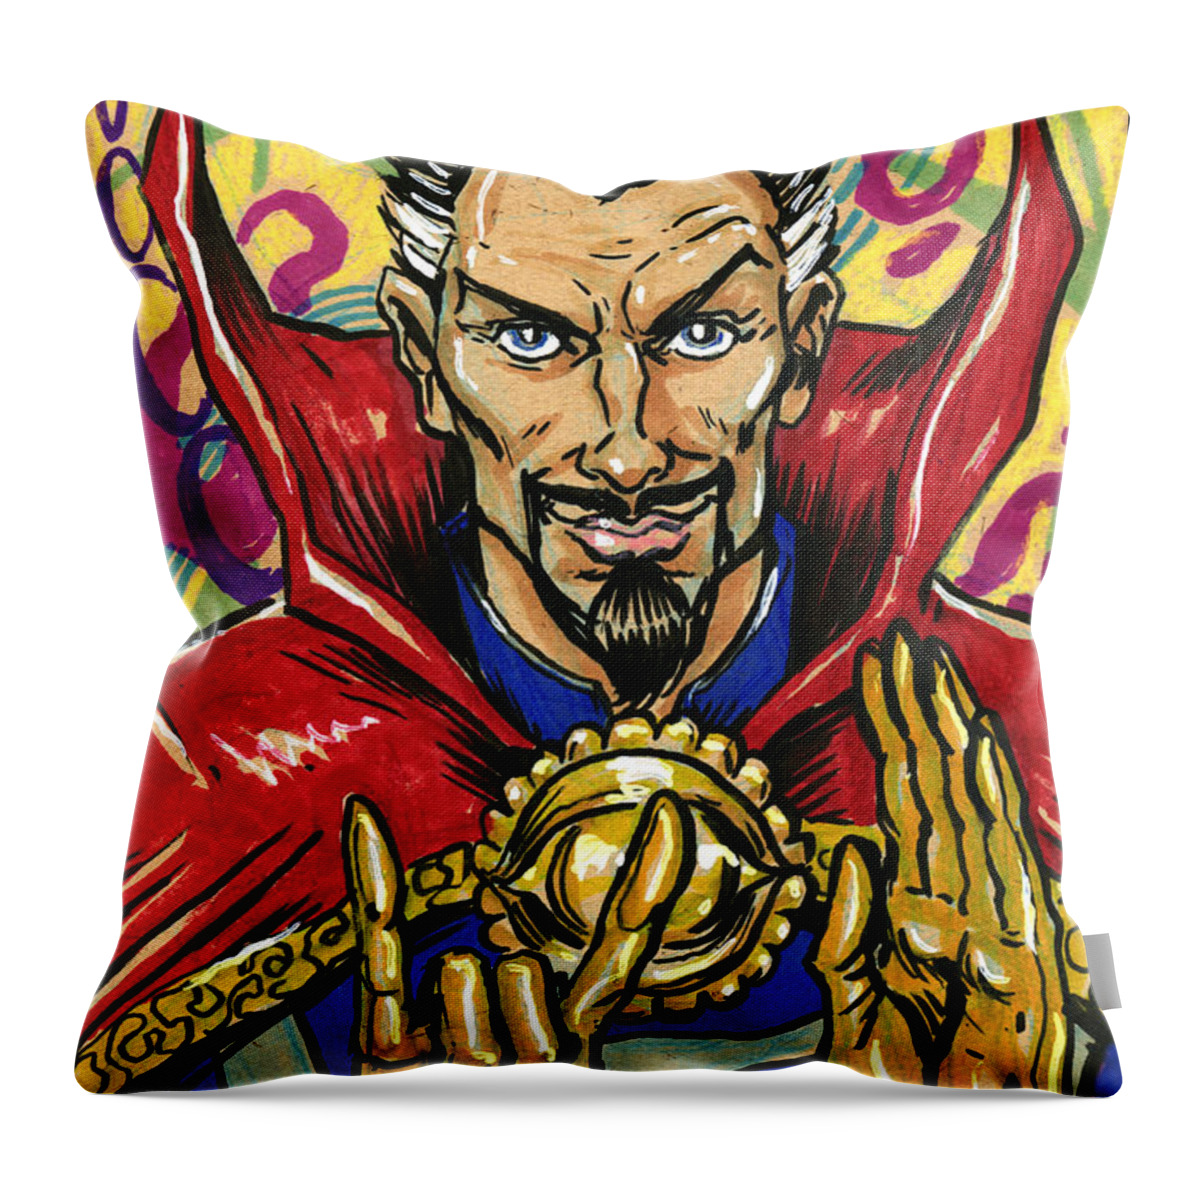 Dr. Strange Throw Pillow featuring the drawing Doctor Strange by John Ashton Golden